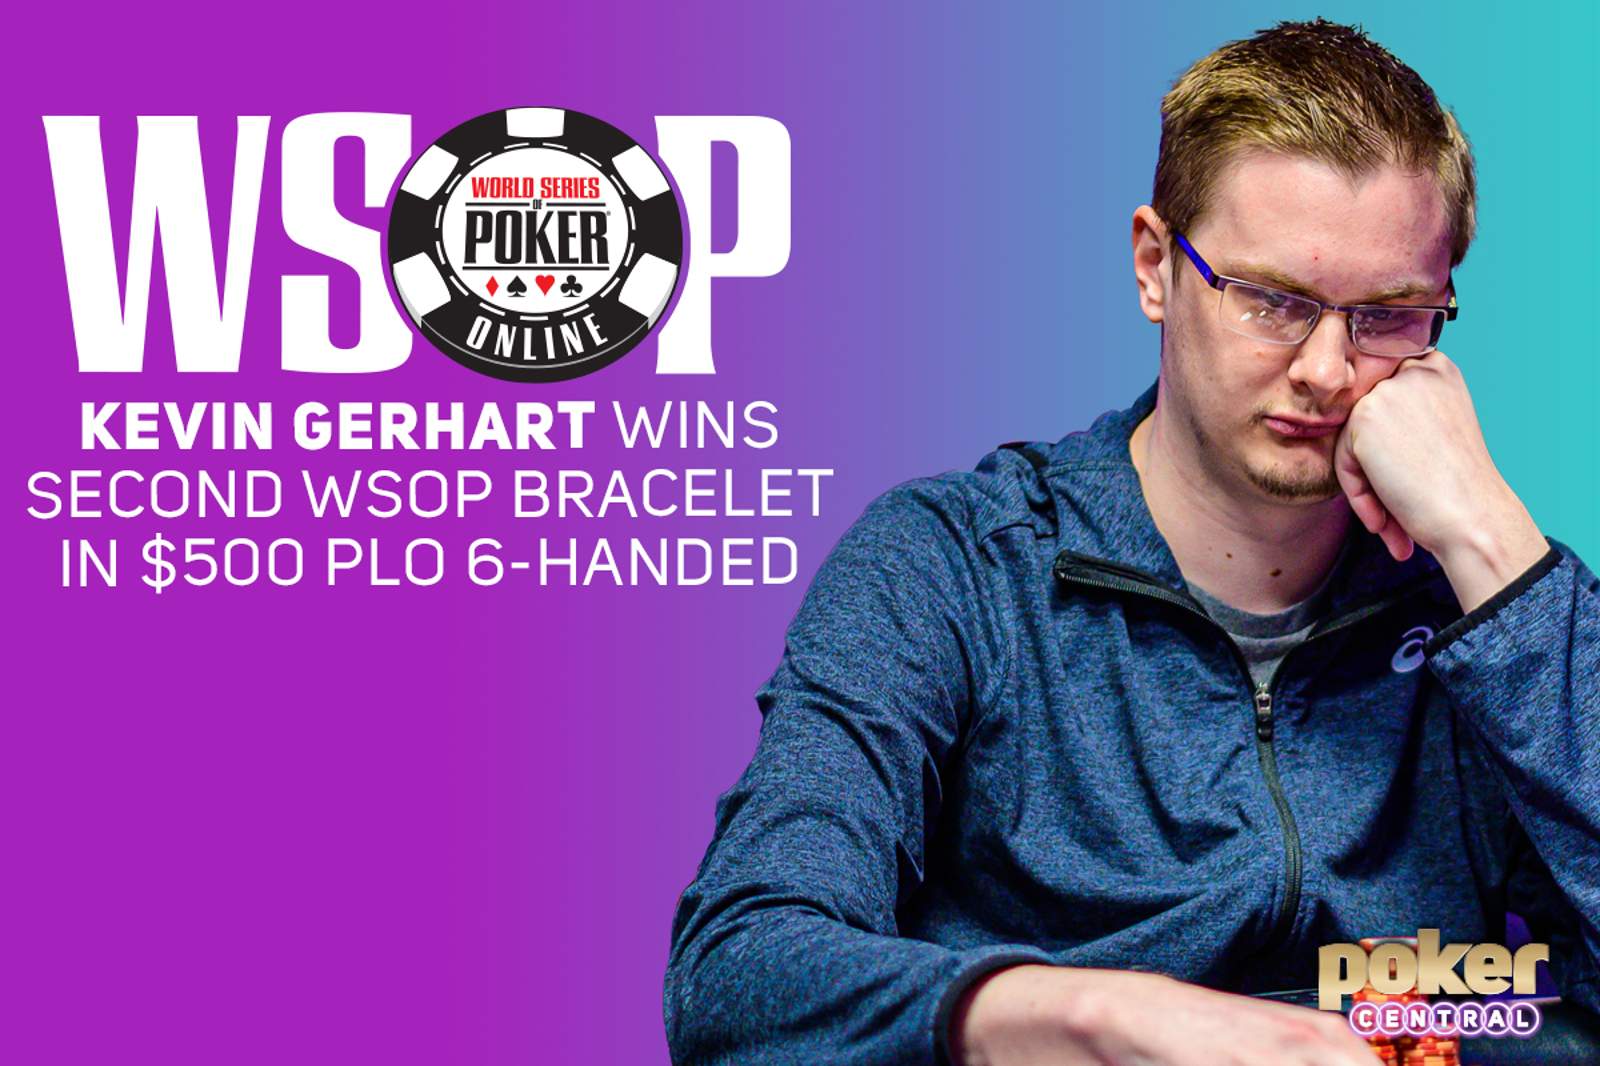 Kevin Gerhart Wins WSOP Online PLO for $97,572 and Second WSOP Bracelet